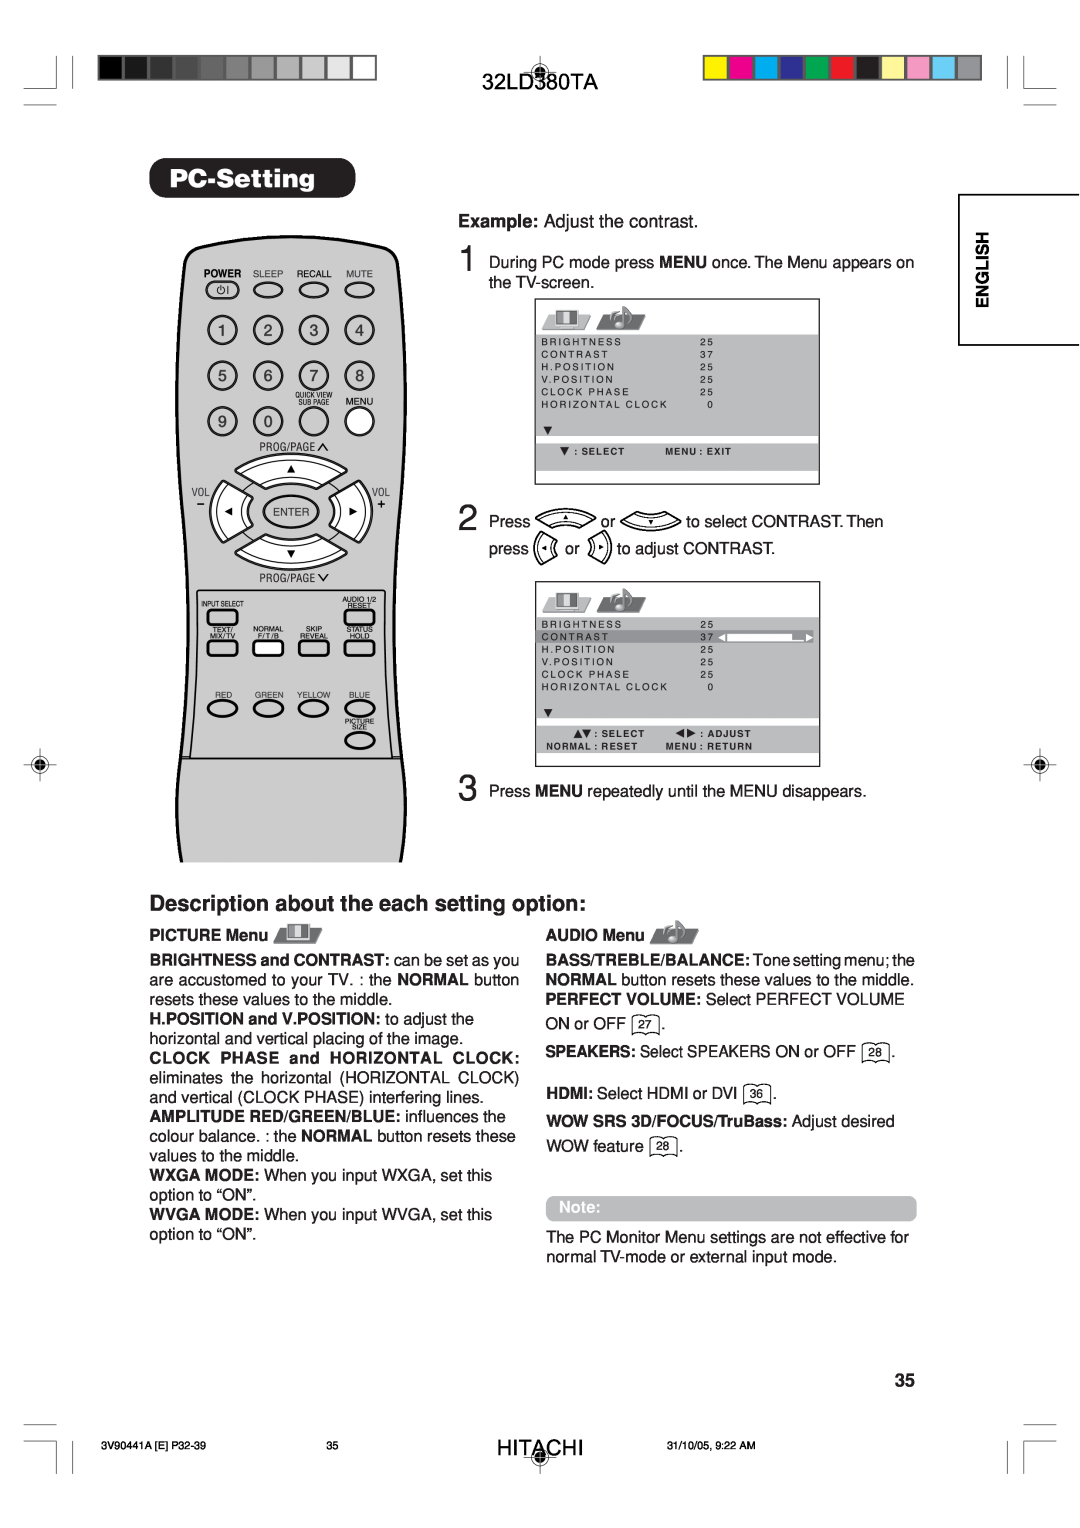 Hitachi 32LD380TA PC-Setting, Description about the each setting option, Example Adjust the contrast, AUDIO Menu, Hitachi 